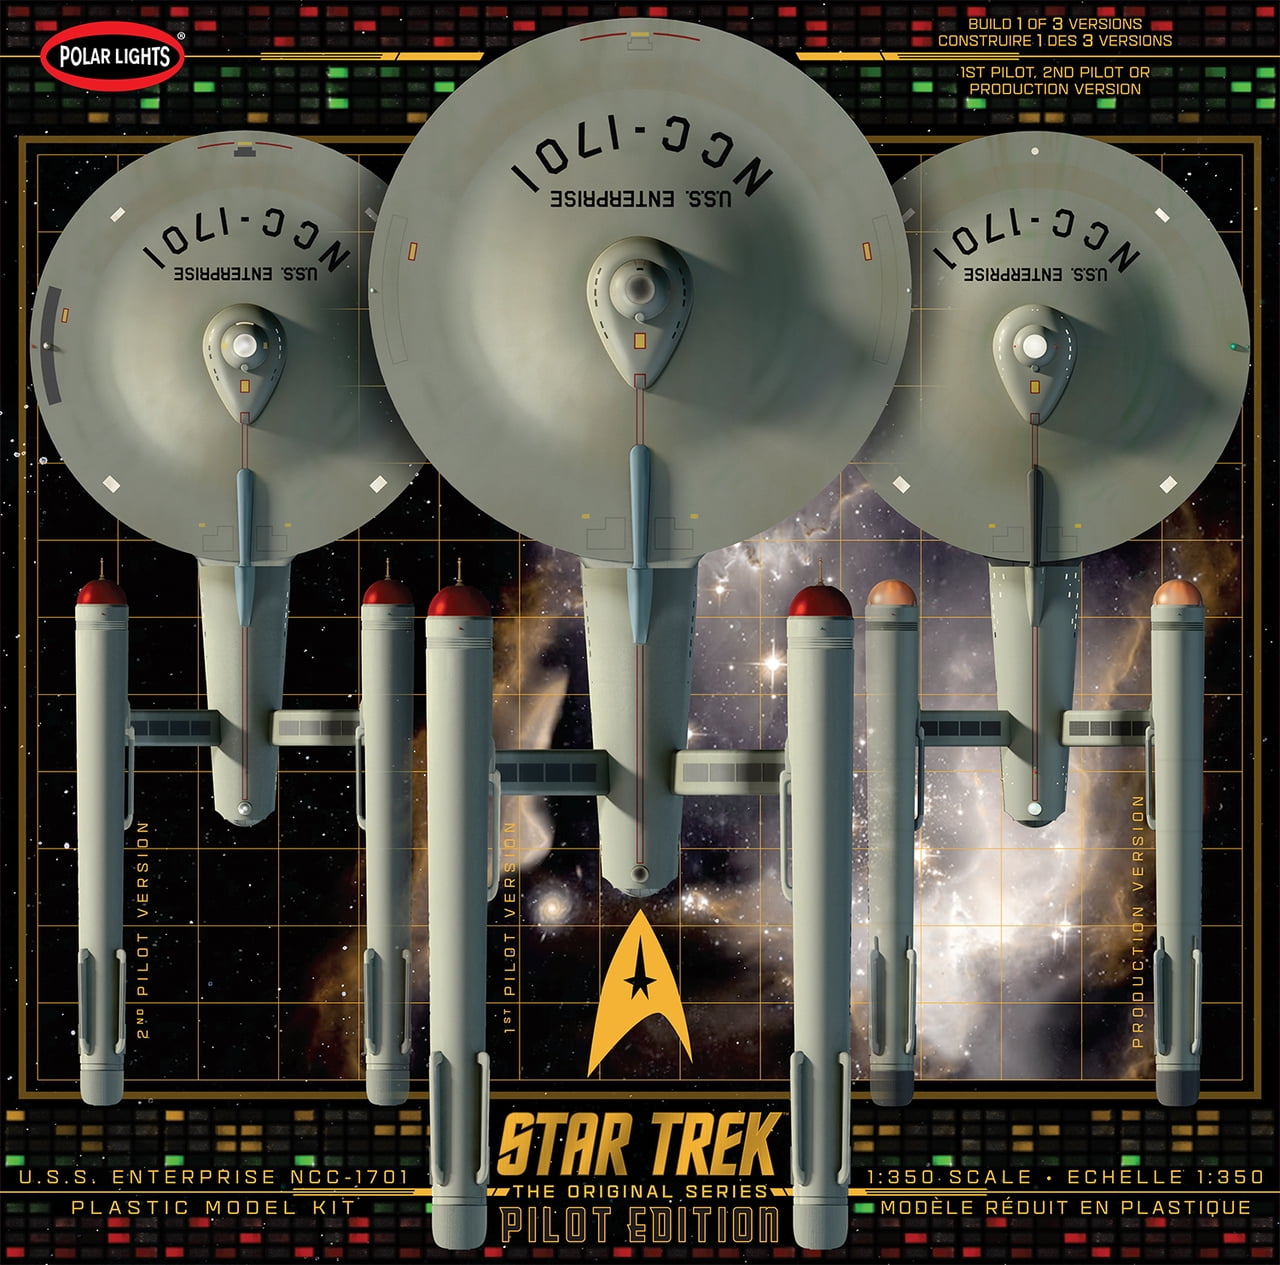 AMT AMT954 1:25 Scale Star Trek Snap Model Kit for sale online 